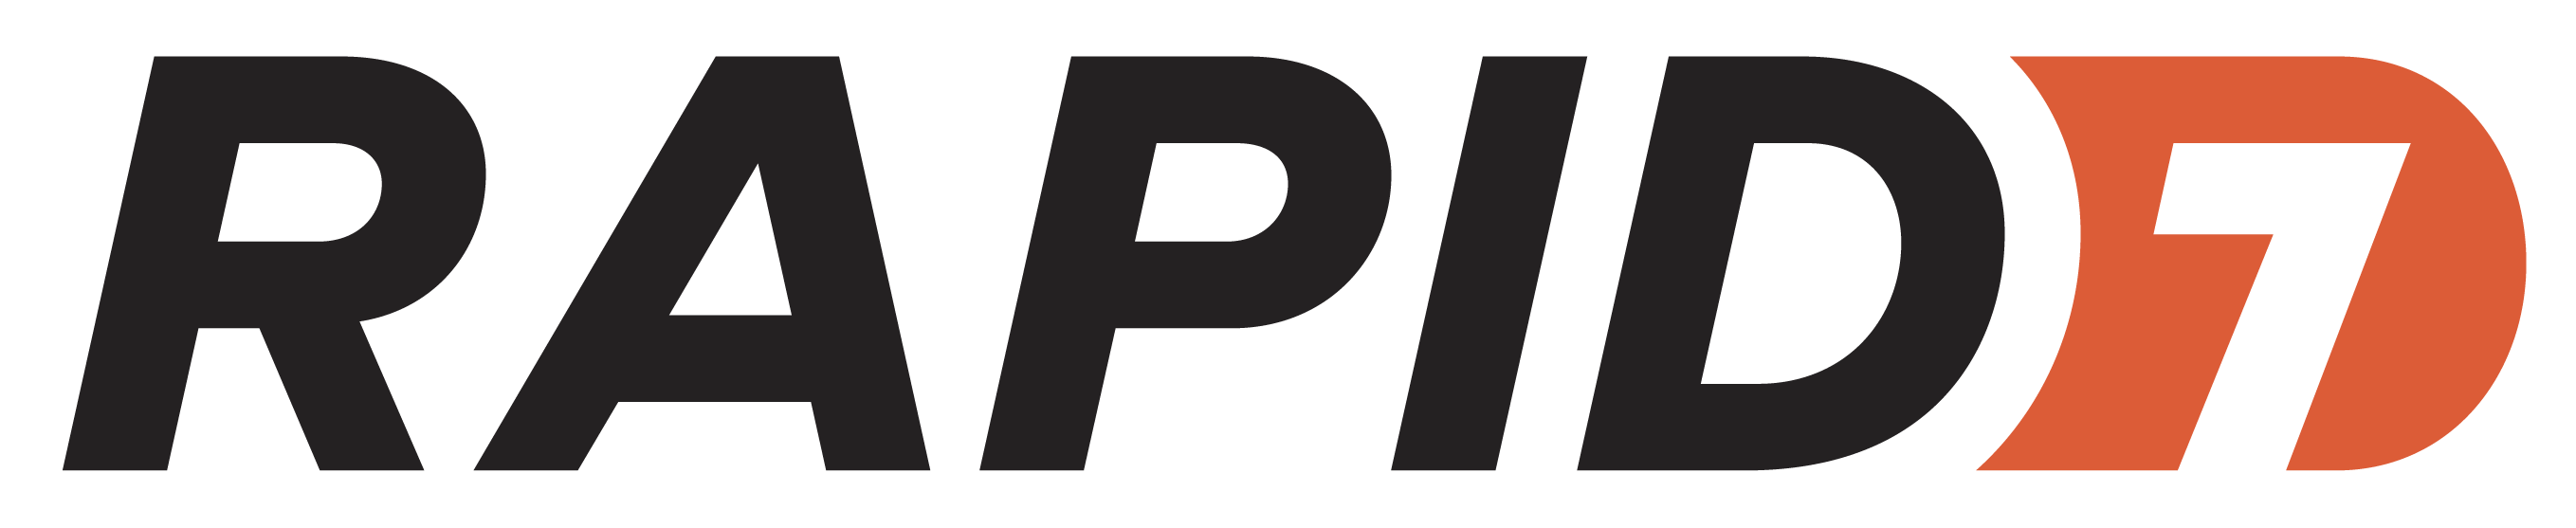 Rapid7 - logo